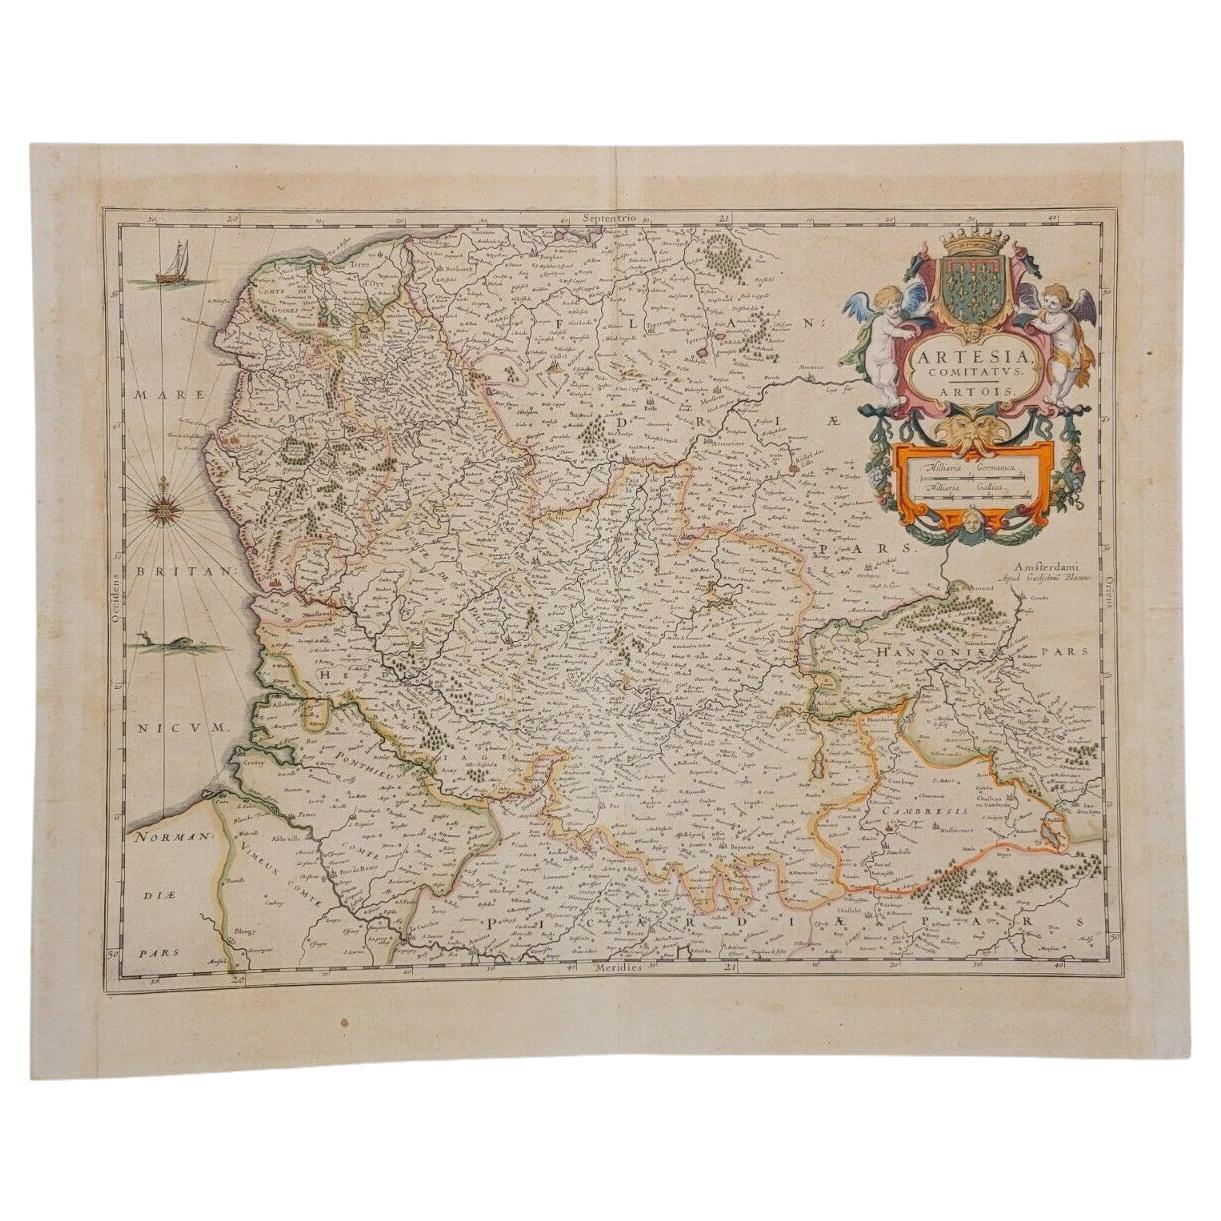 1620 Map of Artois Entitled "Artesia Comitatvs Artois, " by Bleau, Ric.a012